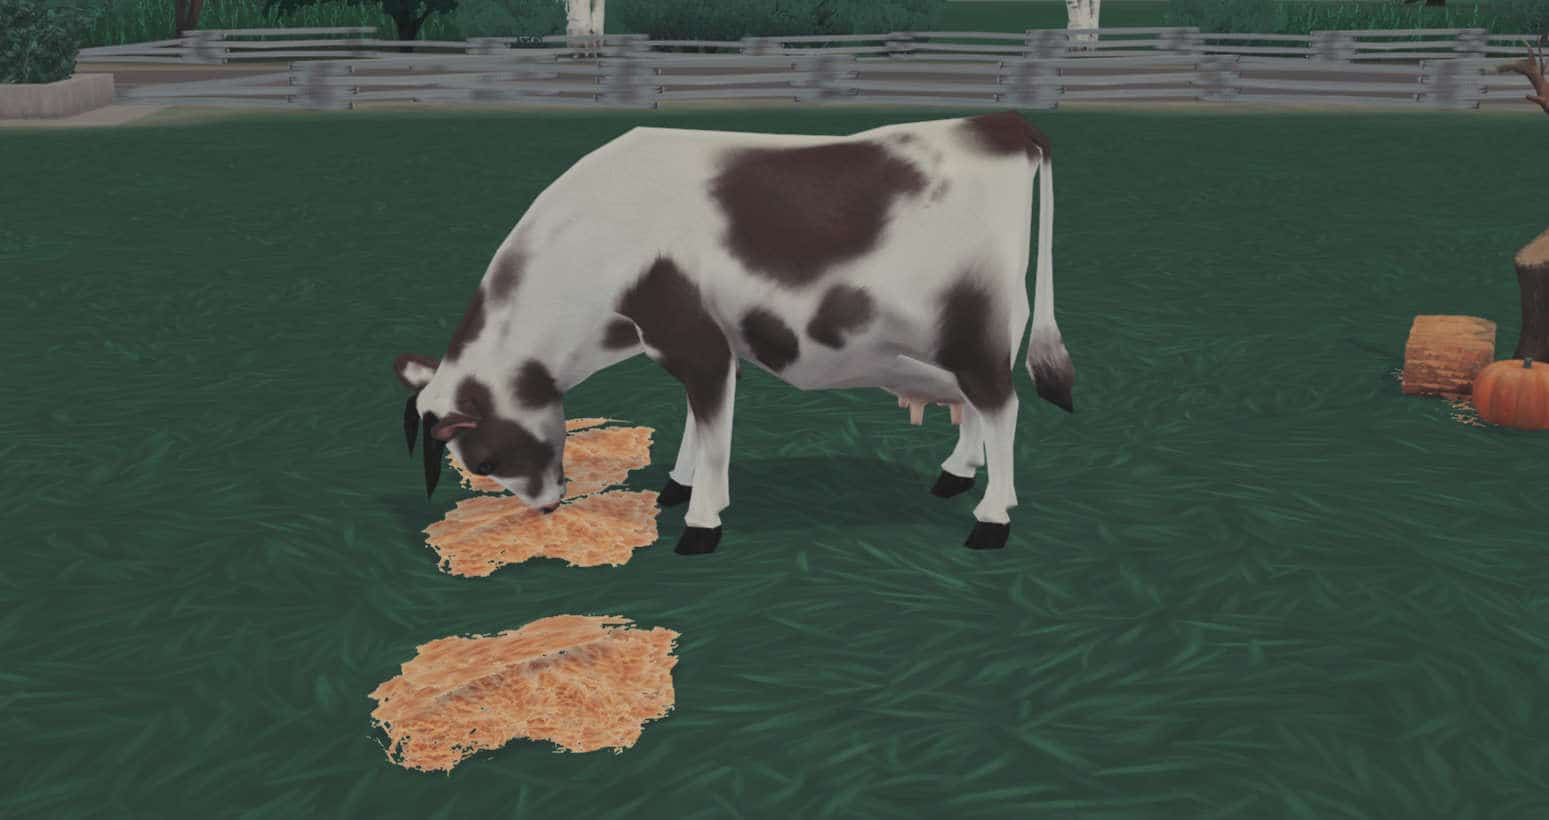 sims 4 dairy cow mod public release